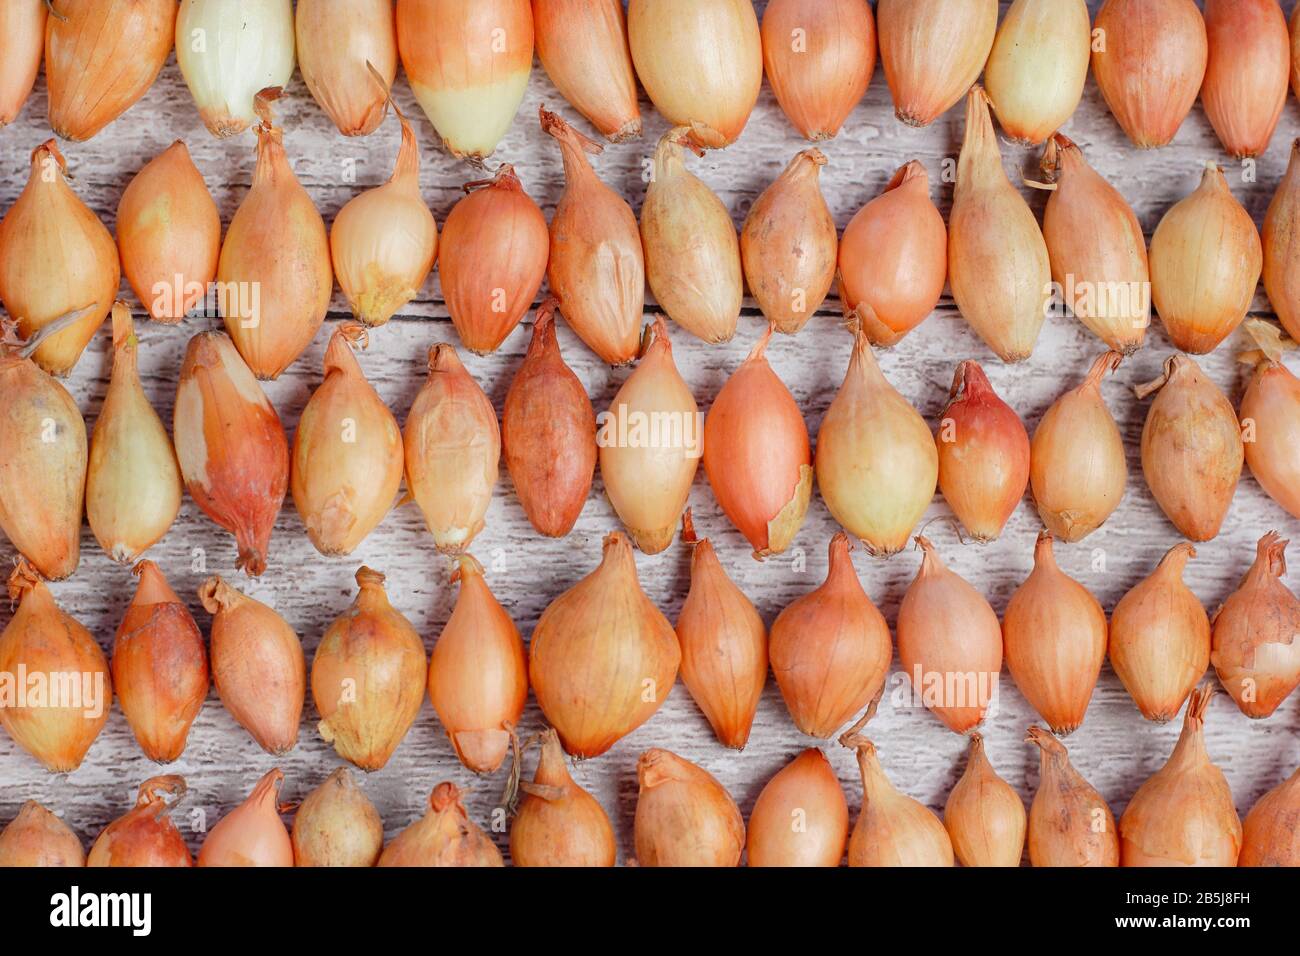 Allium cepa 'Centurion' onion set arranged in rows. UK Stock Photo